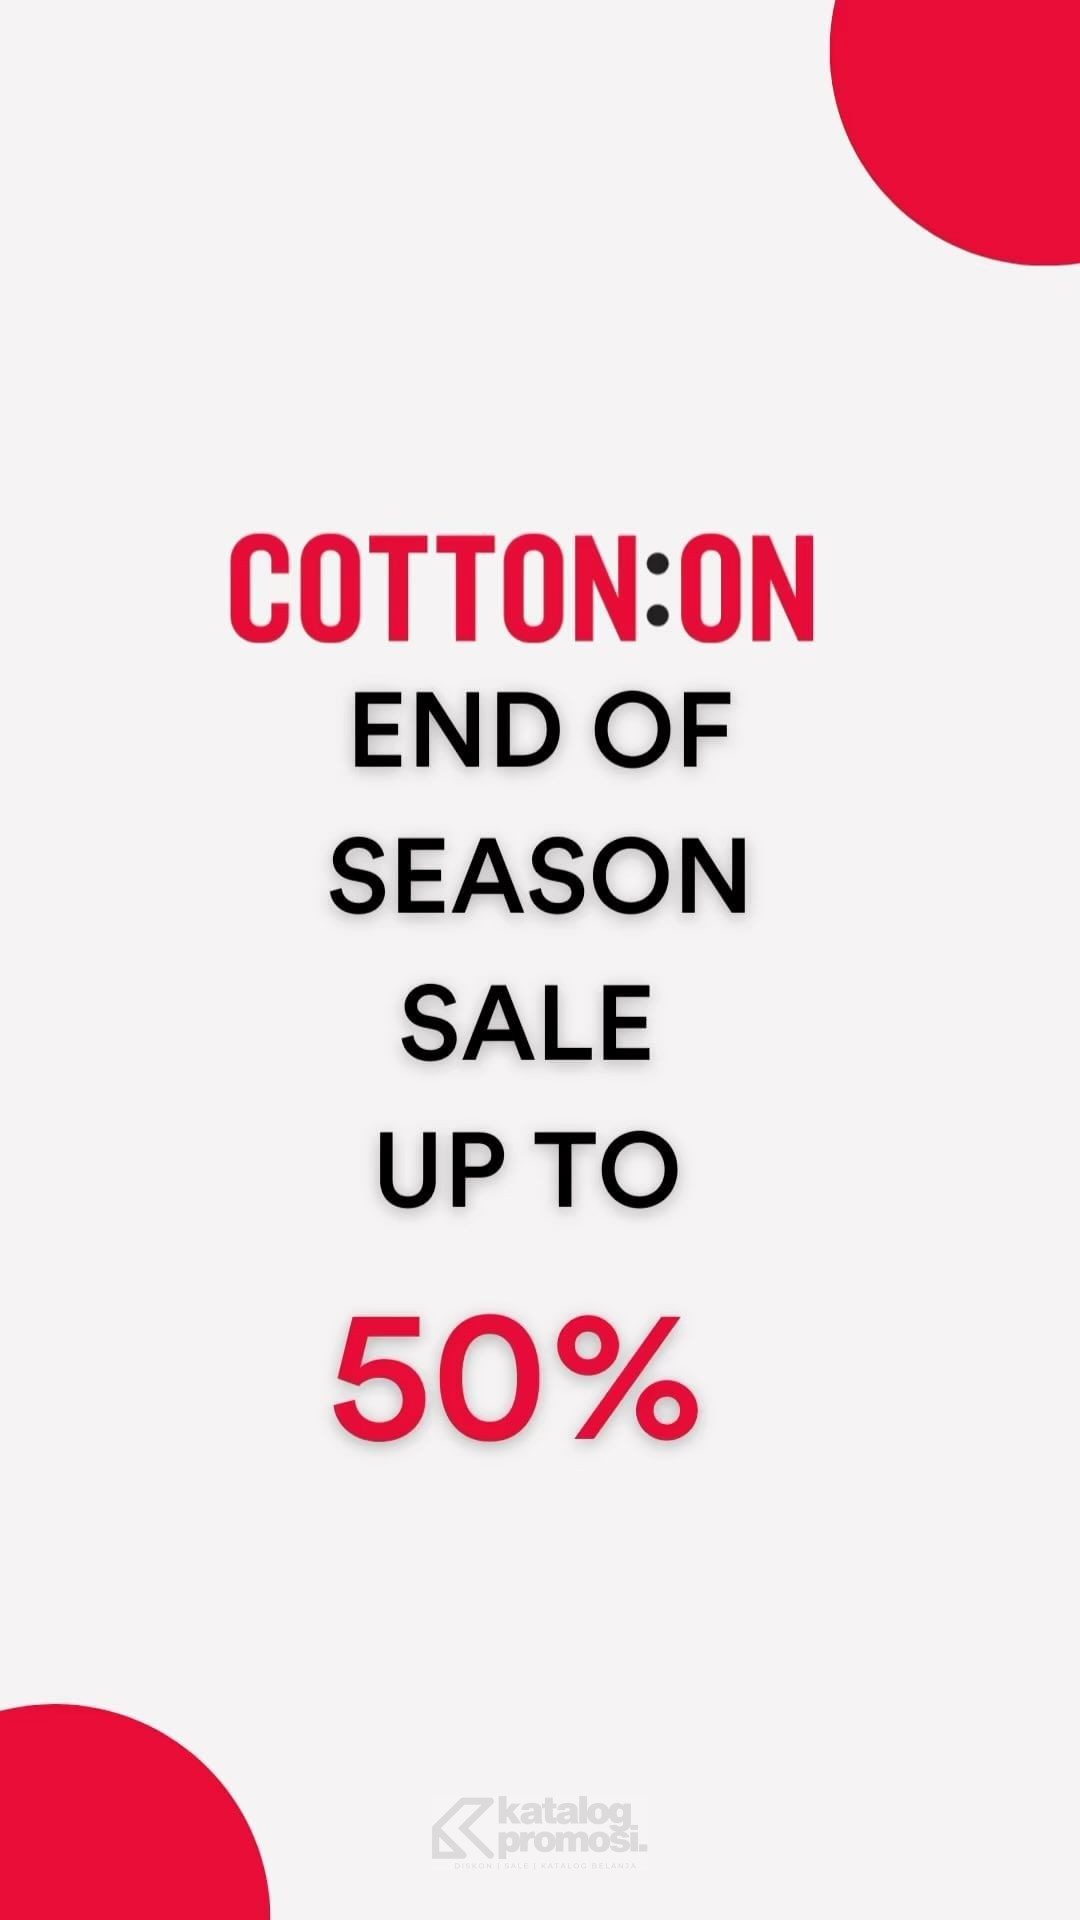 Promo Cotton On End Of Season Sale! Enjoy up to 50% OFF